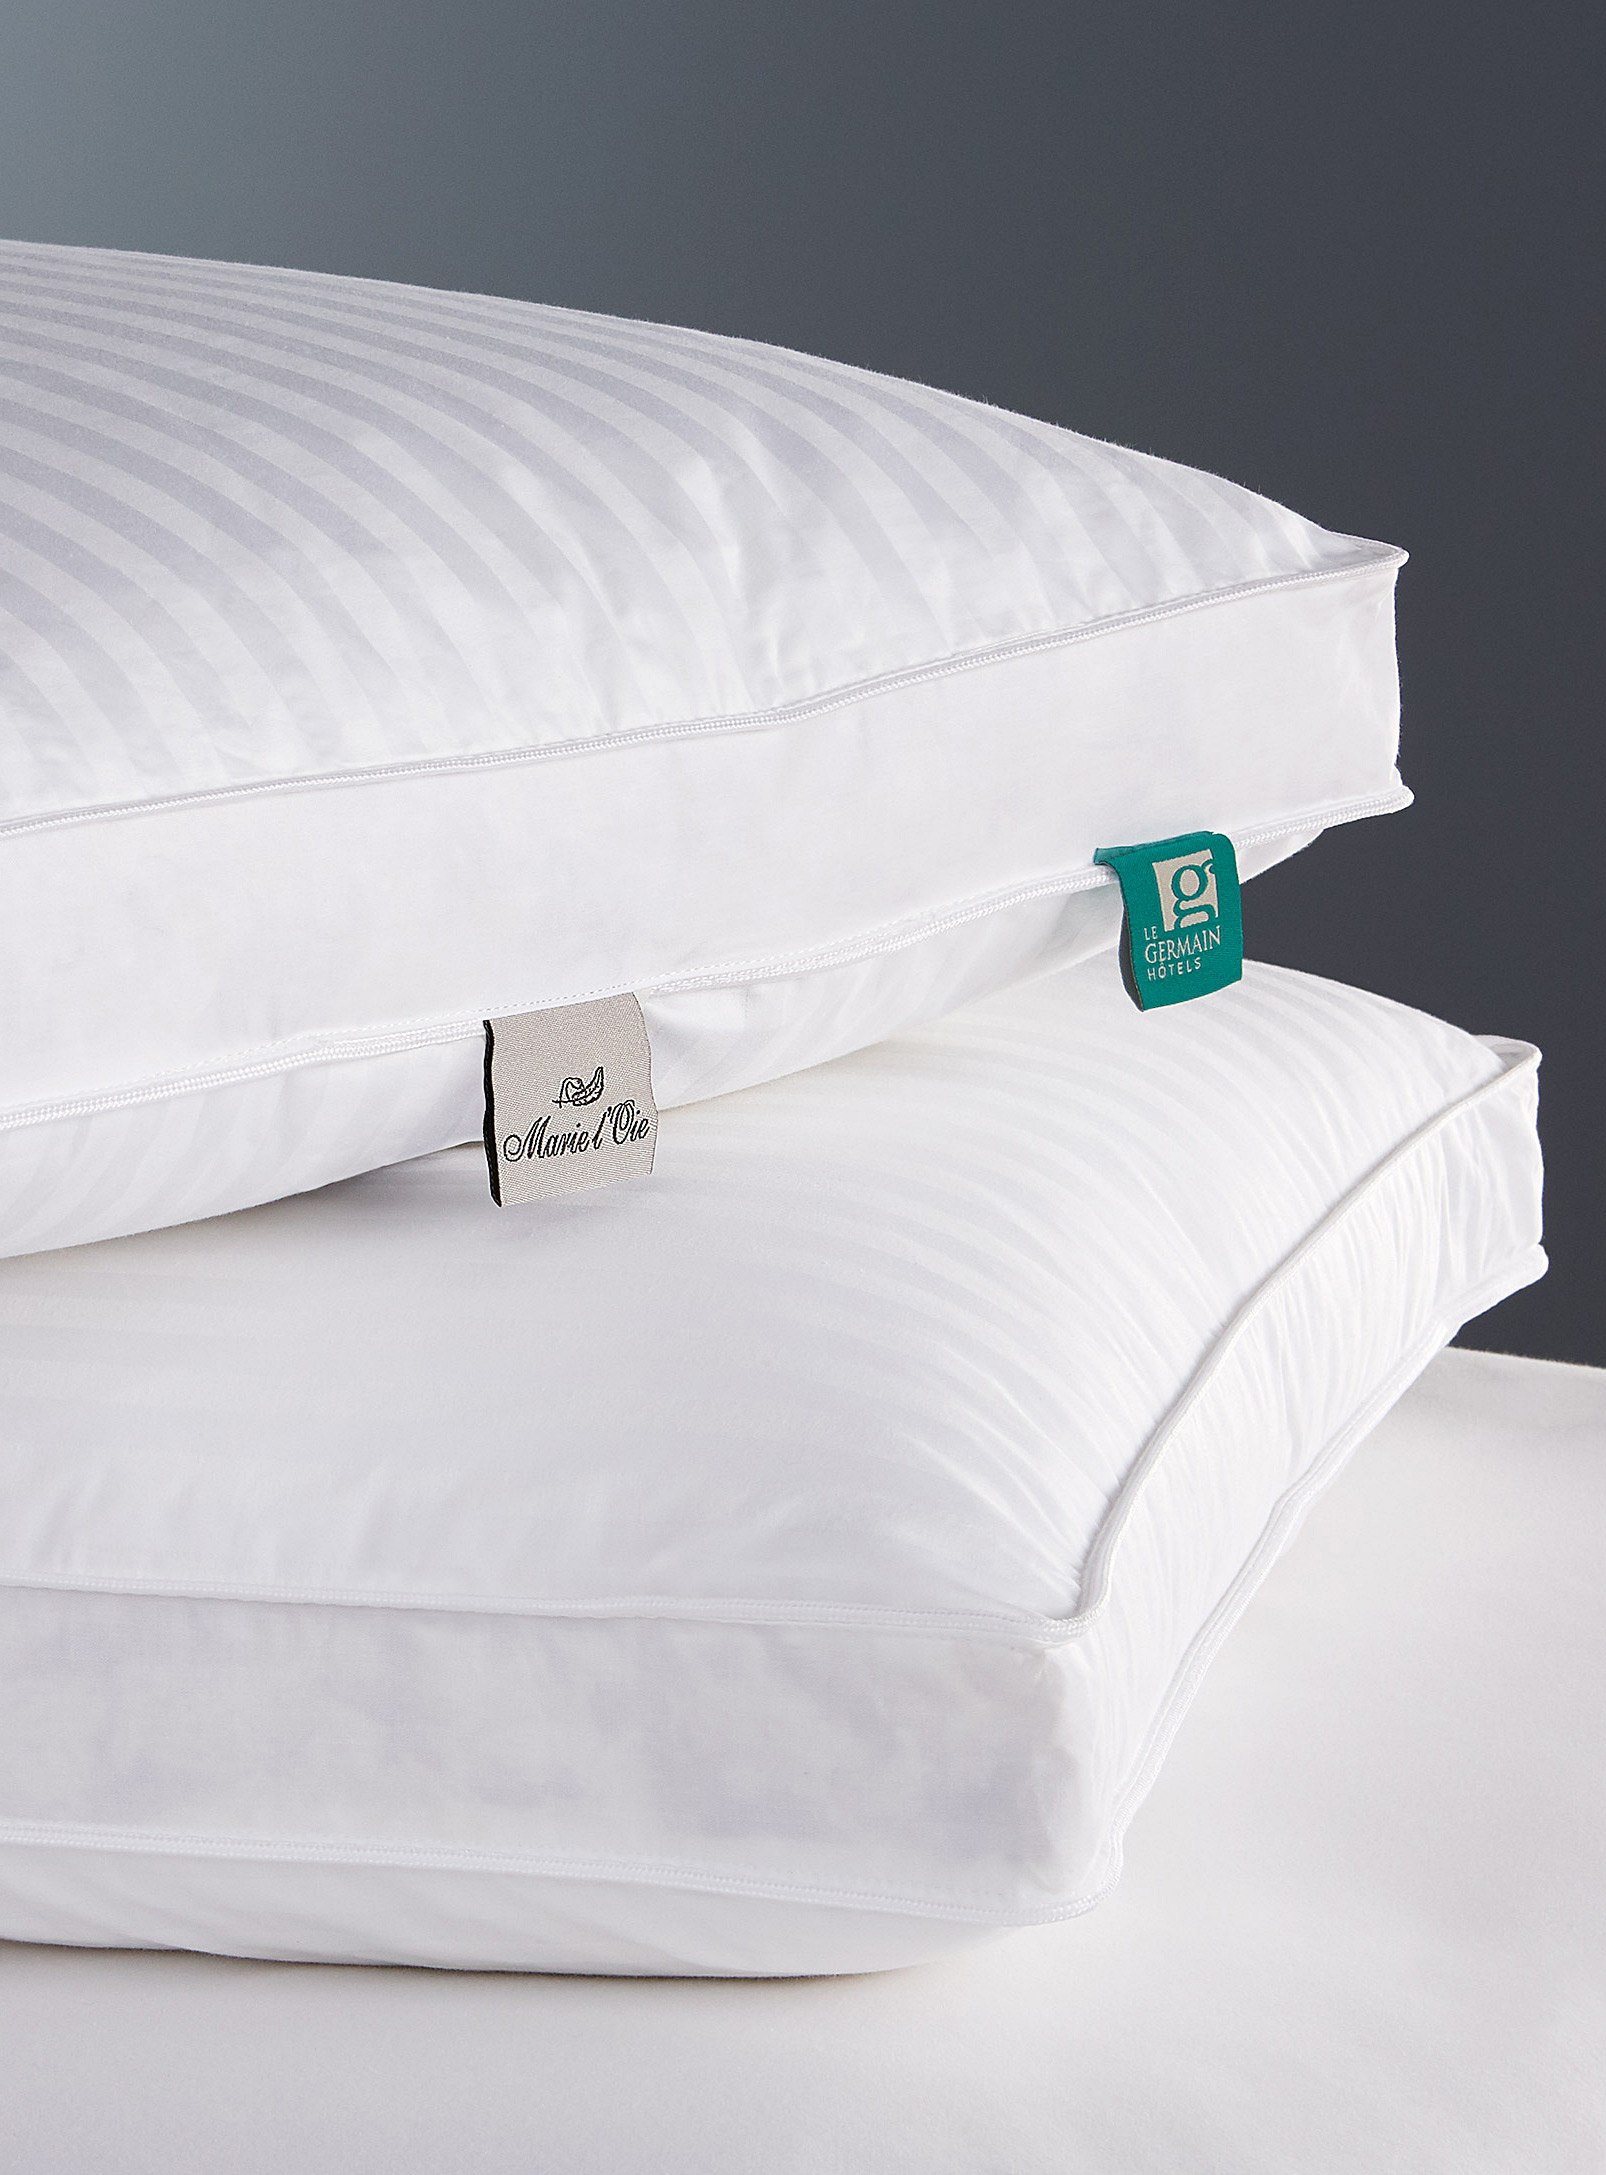 Hôtels Le Germain Duveteuse Pillow Semi-firm Support In White